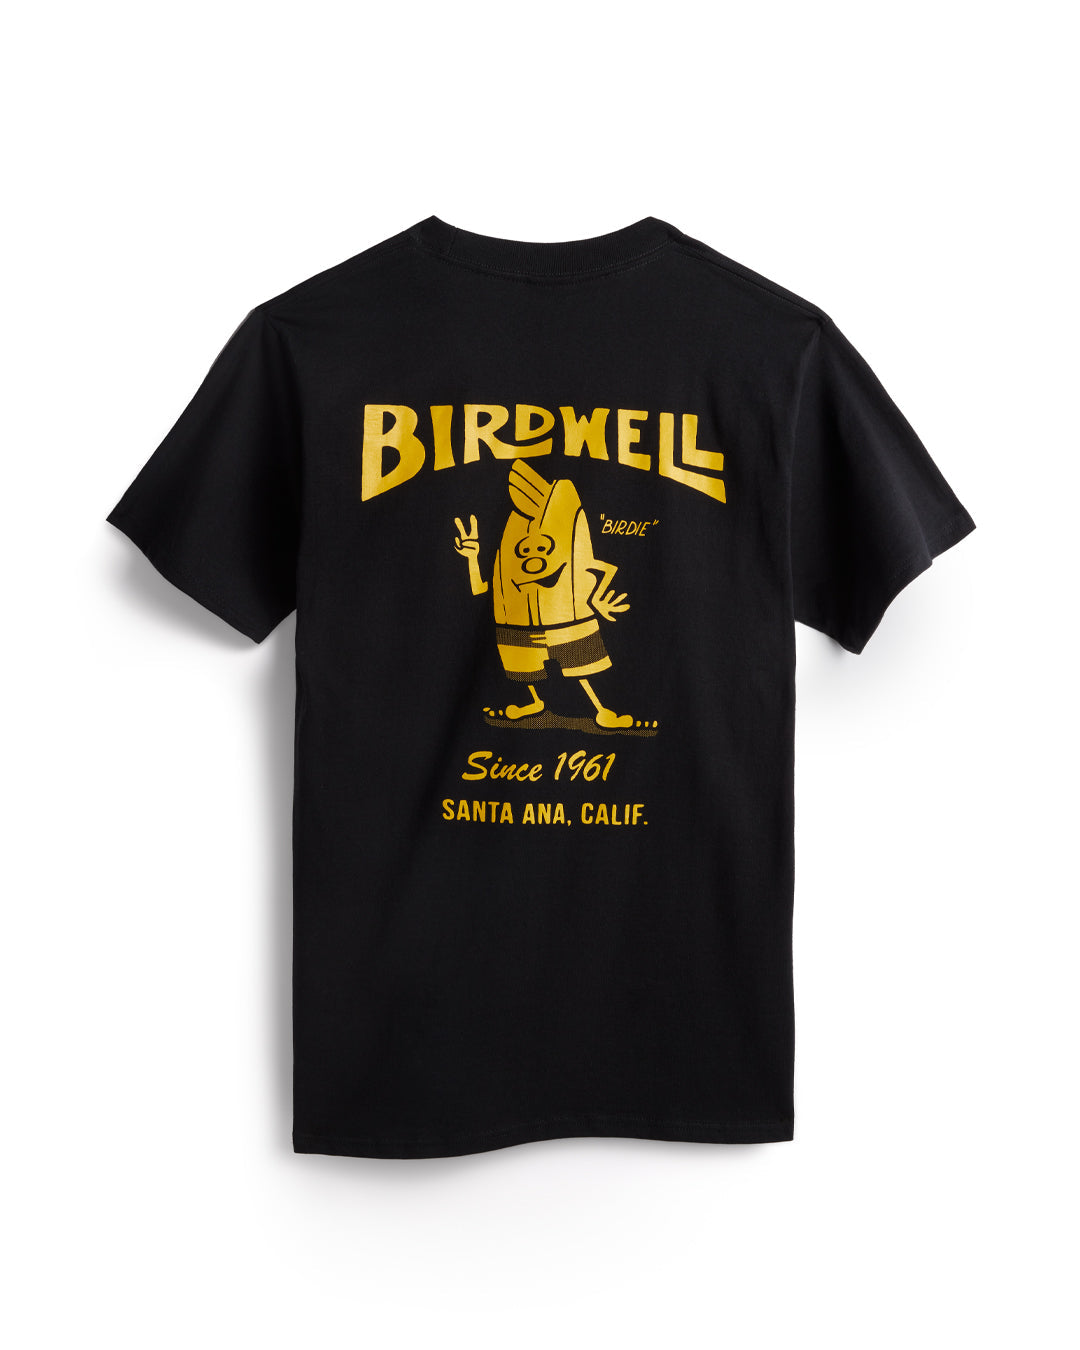 Birdwell 
'61 T-Shirt - Black - Sun Diego Boardshop